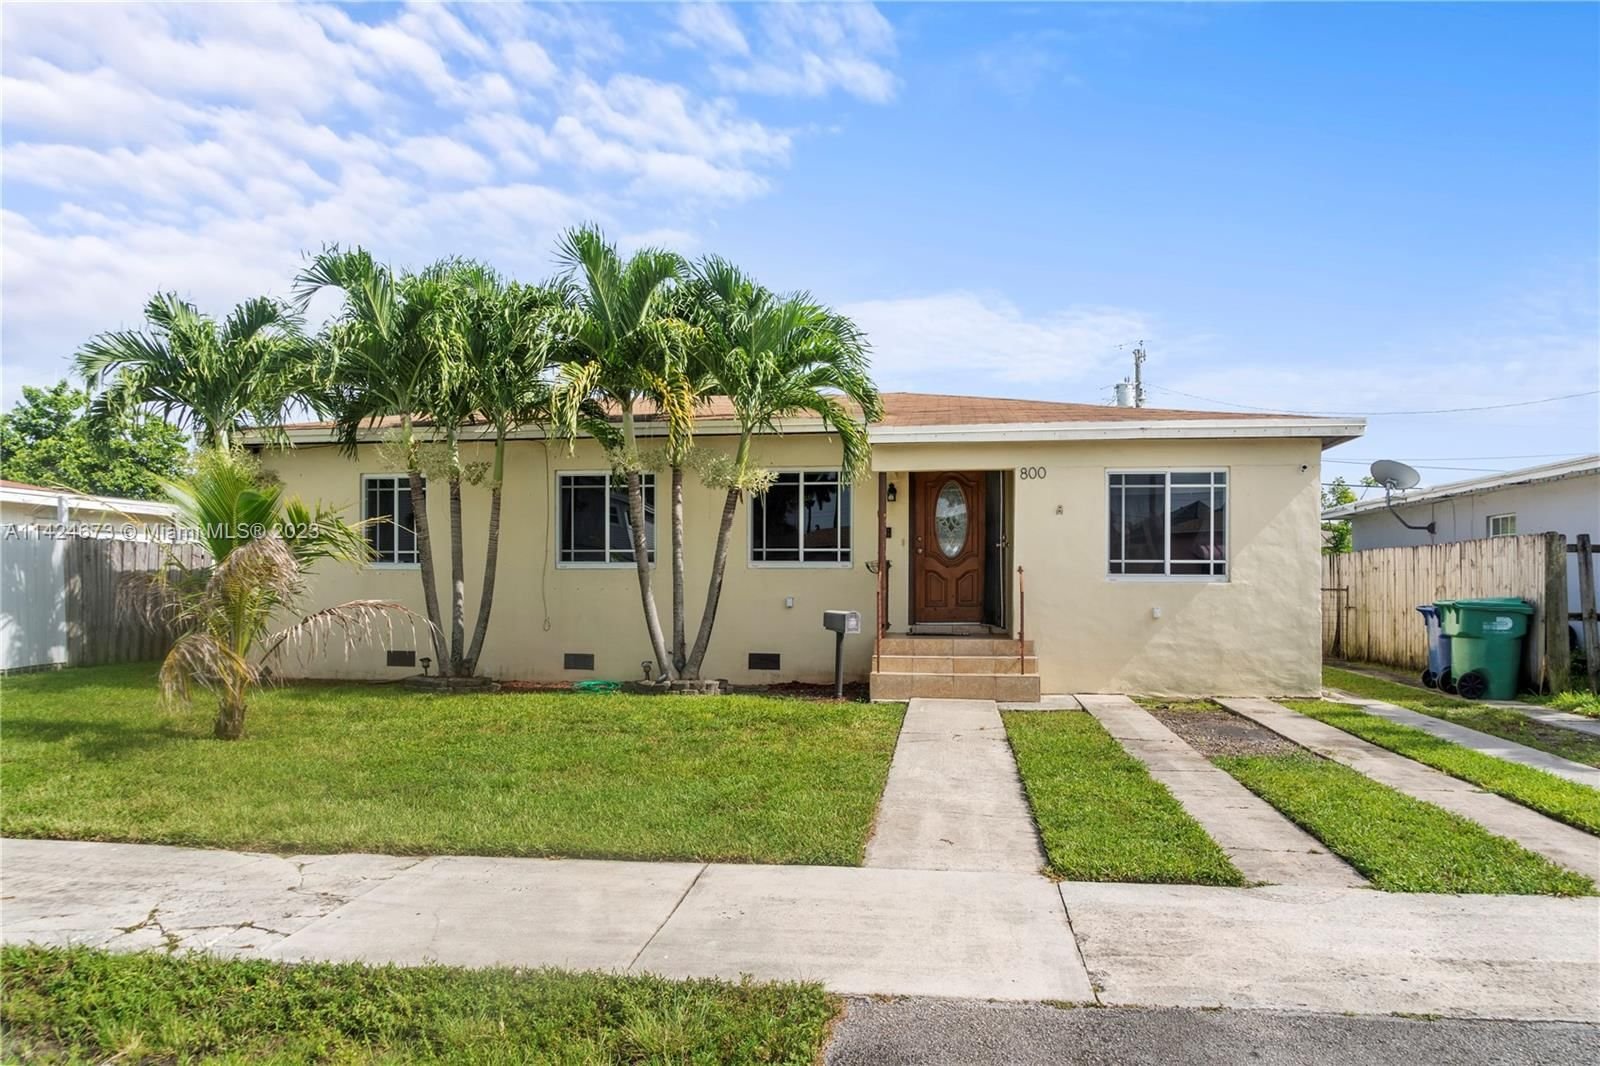 Real estate property located at 800 84th Ter, Miami-Dade County, Miami, FL